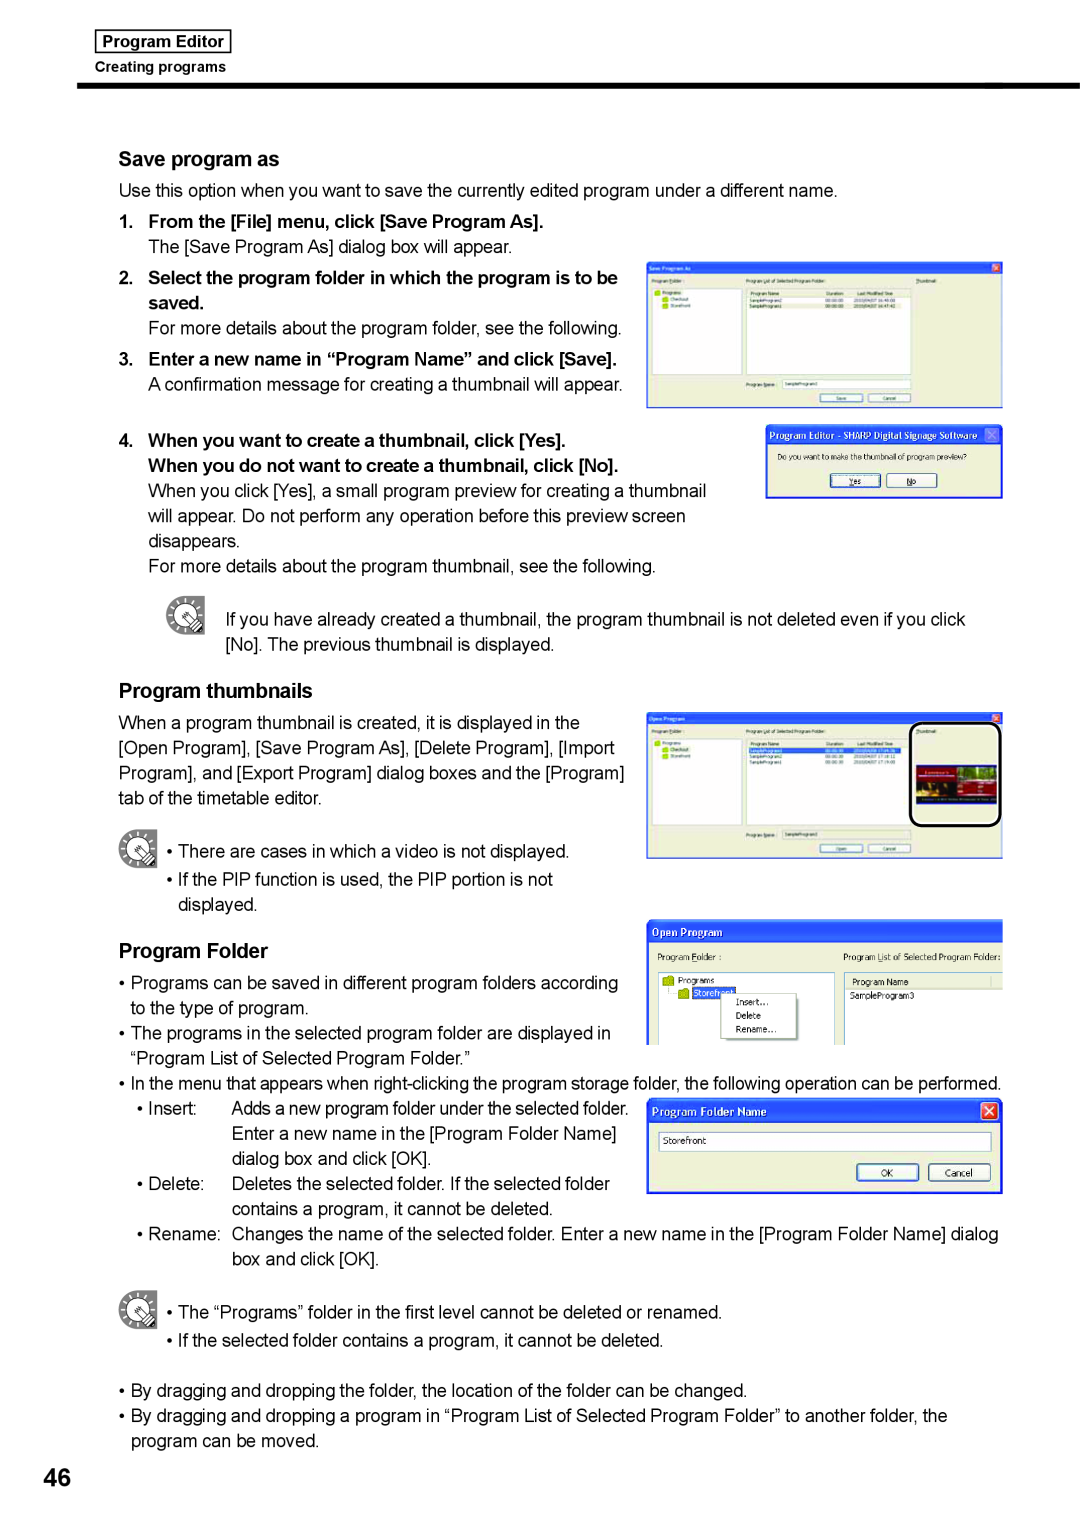 Sharp PNSV01 operation manual Save program as, Program thumbnails, Program Folder 